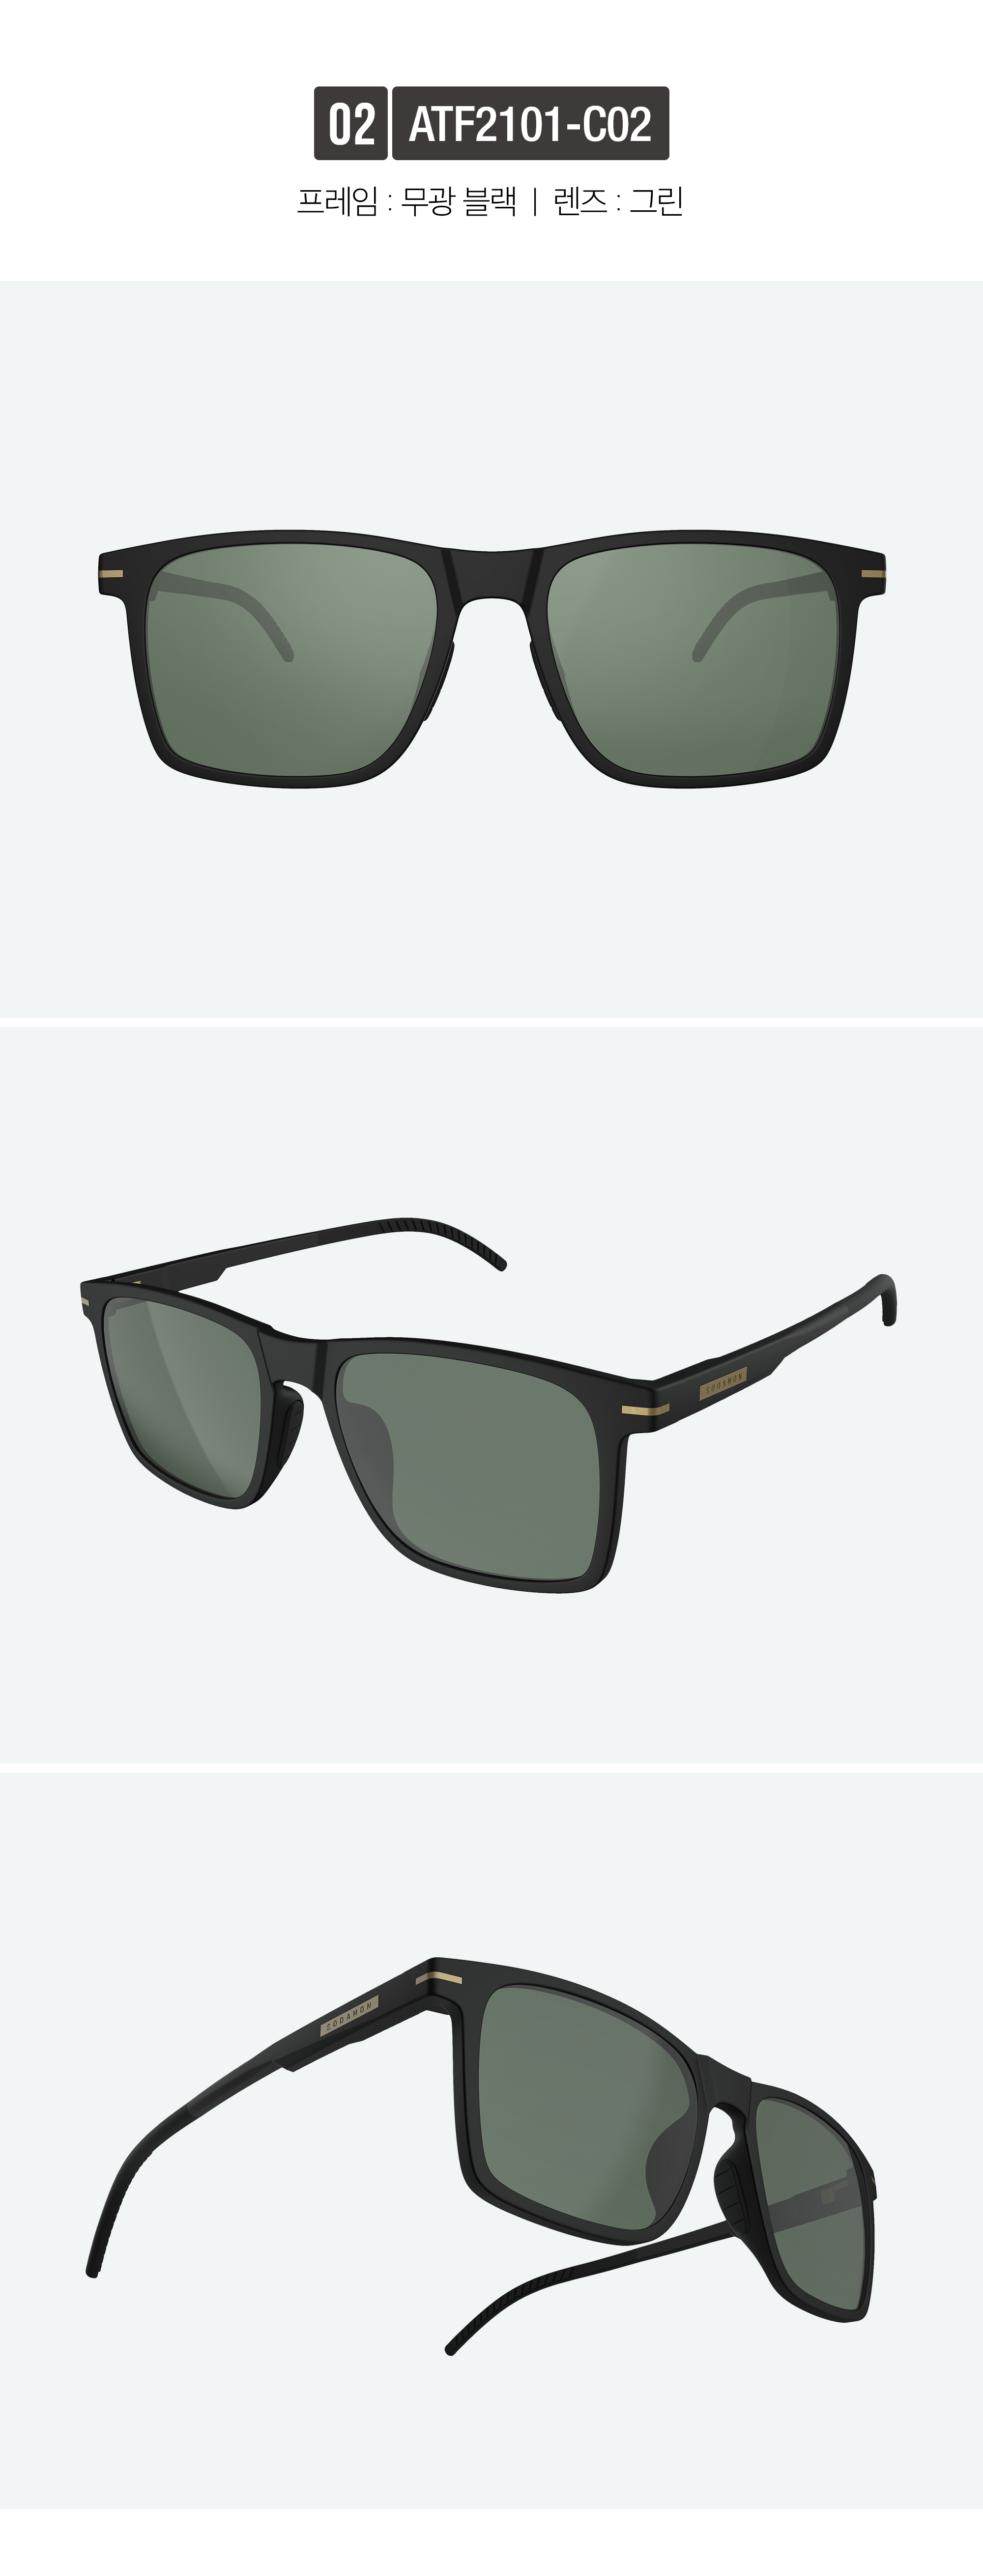 Sodamon Attem Fit ATF2101 Near-Infrared Blocking Sunglasses